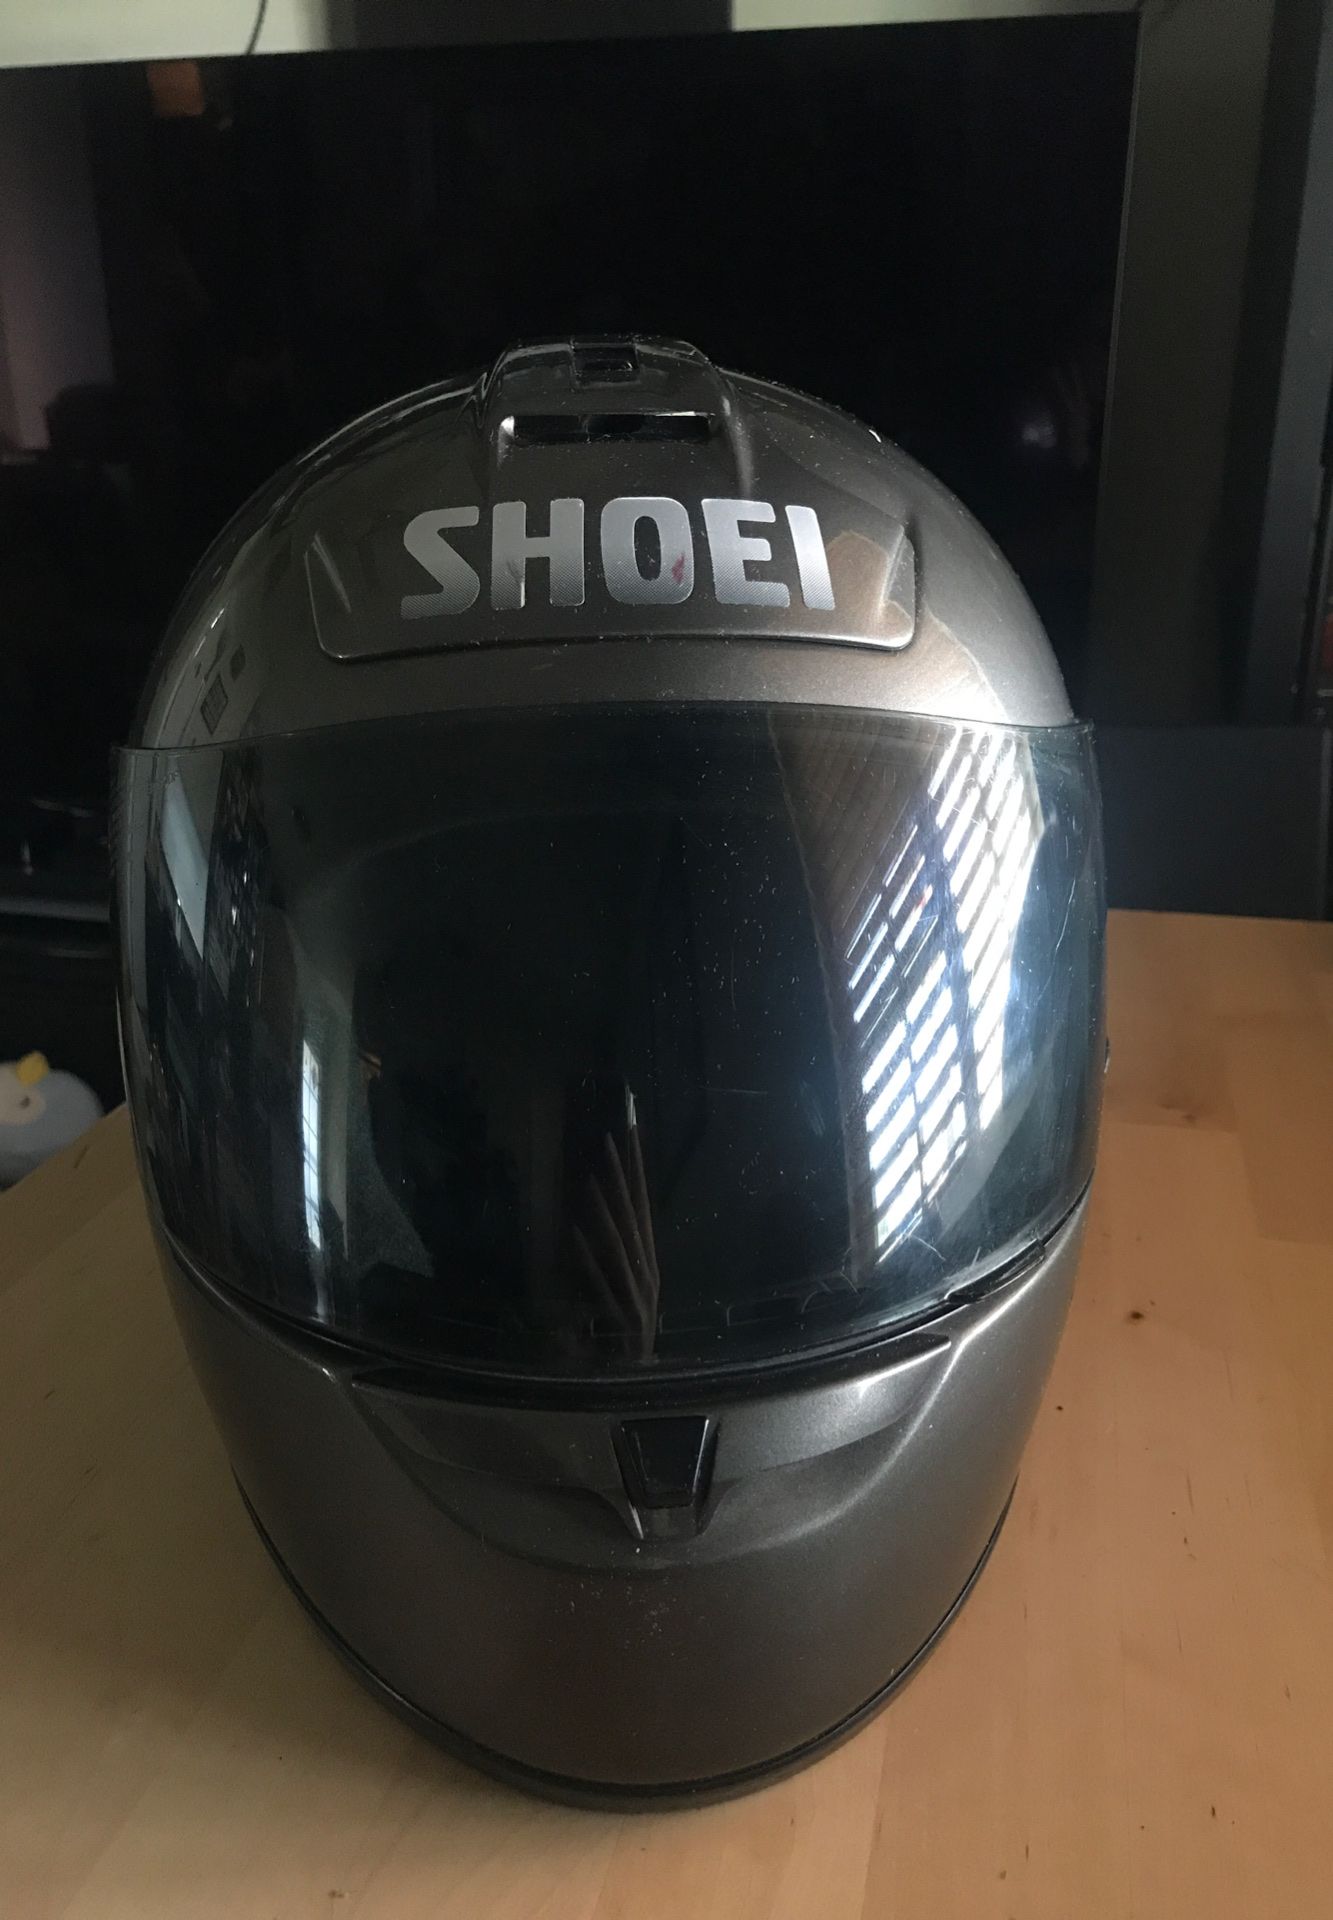 Shoei motorcycle helmet for men